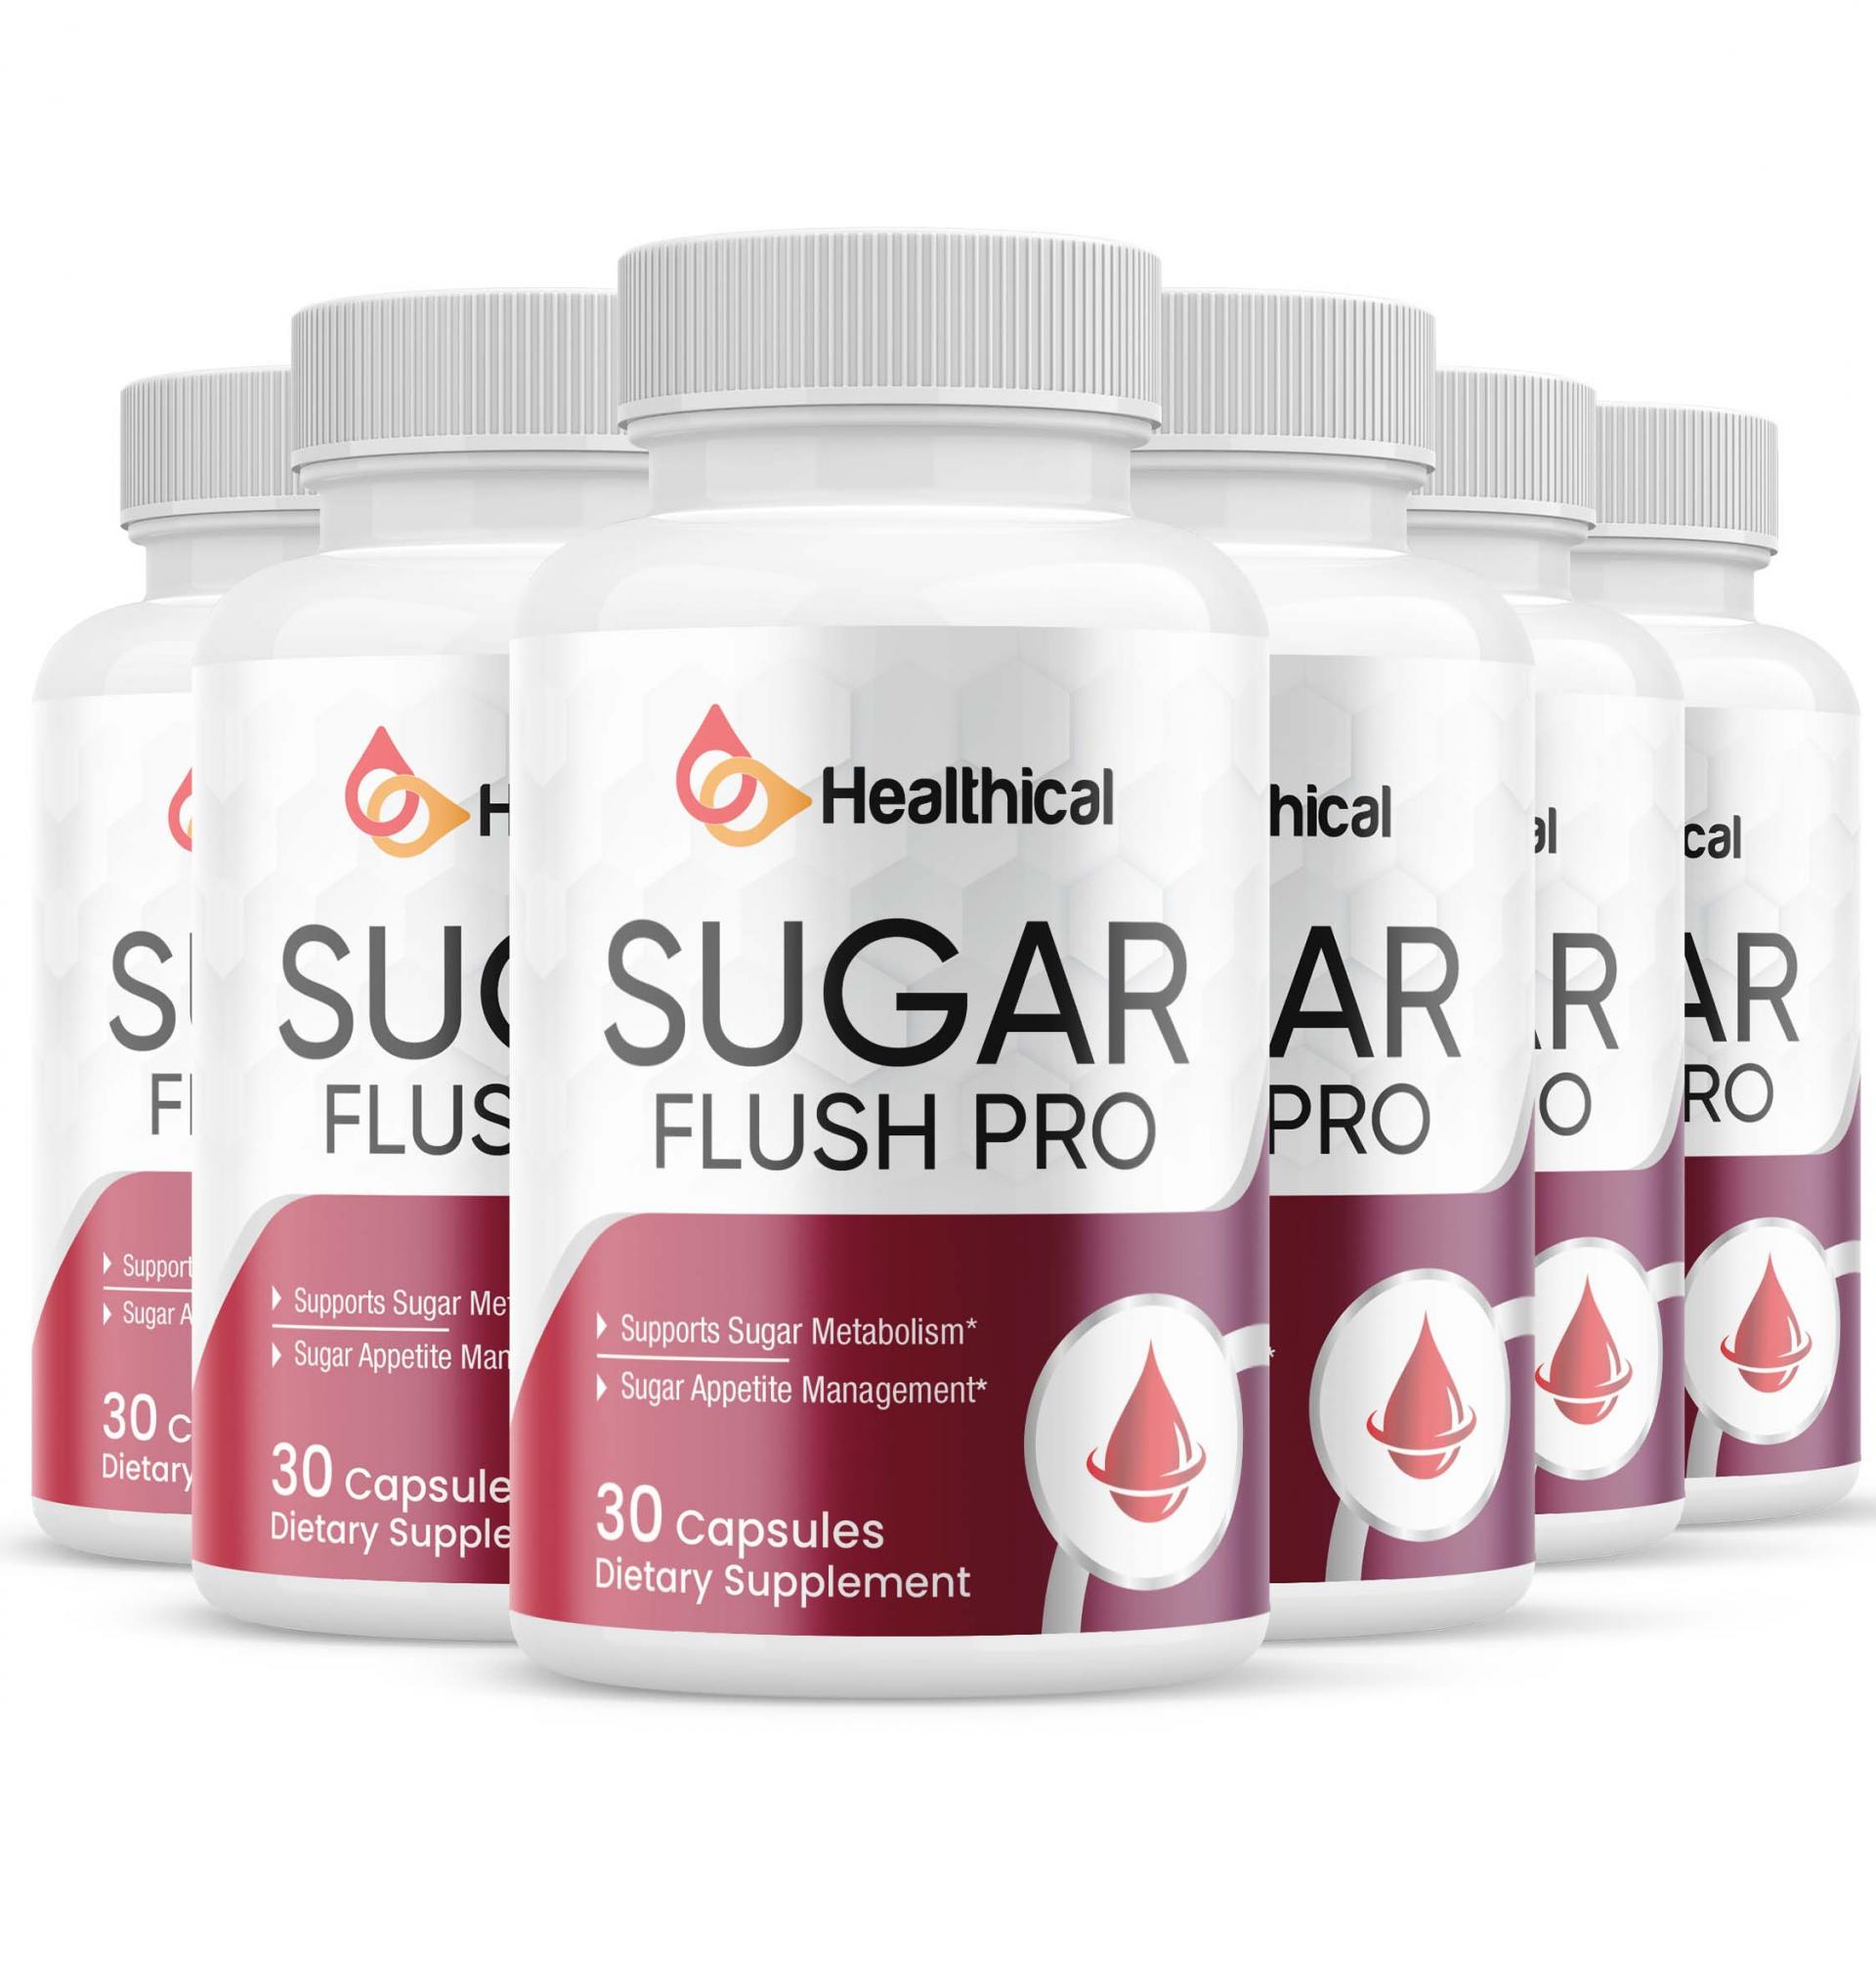 Sugar Flush Pro Reviews